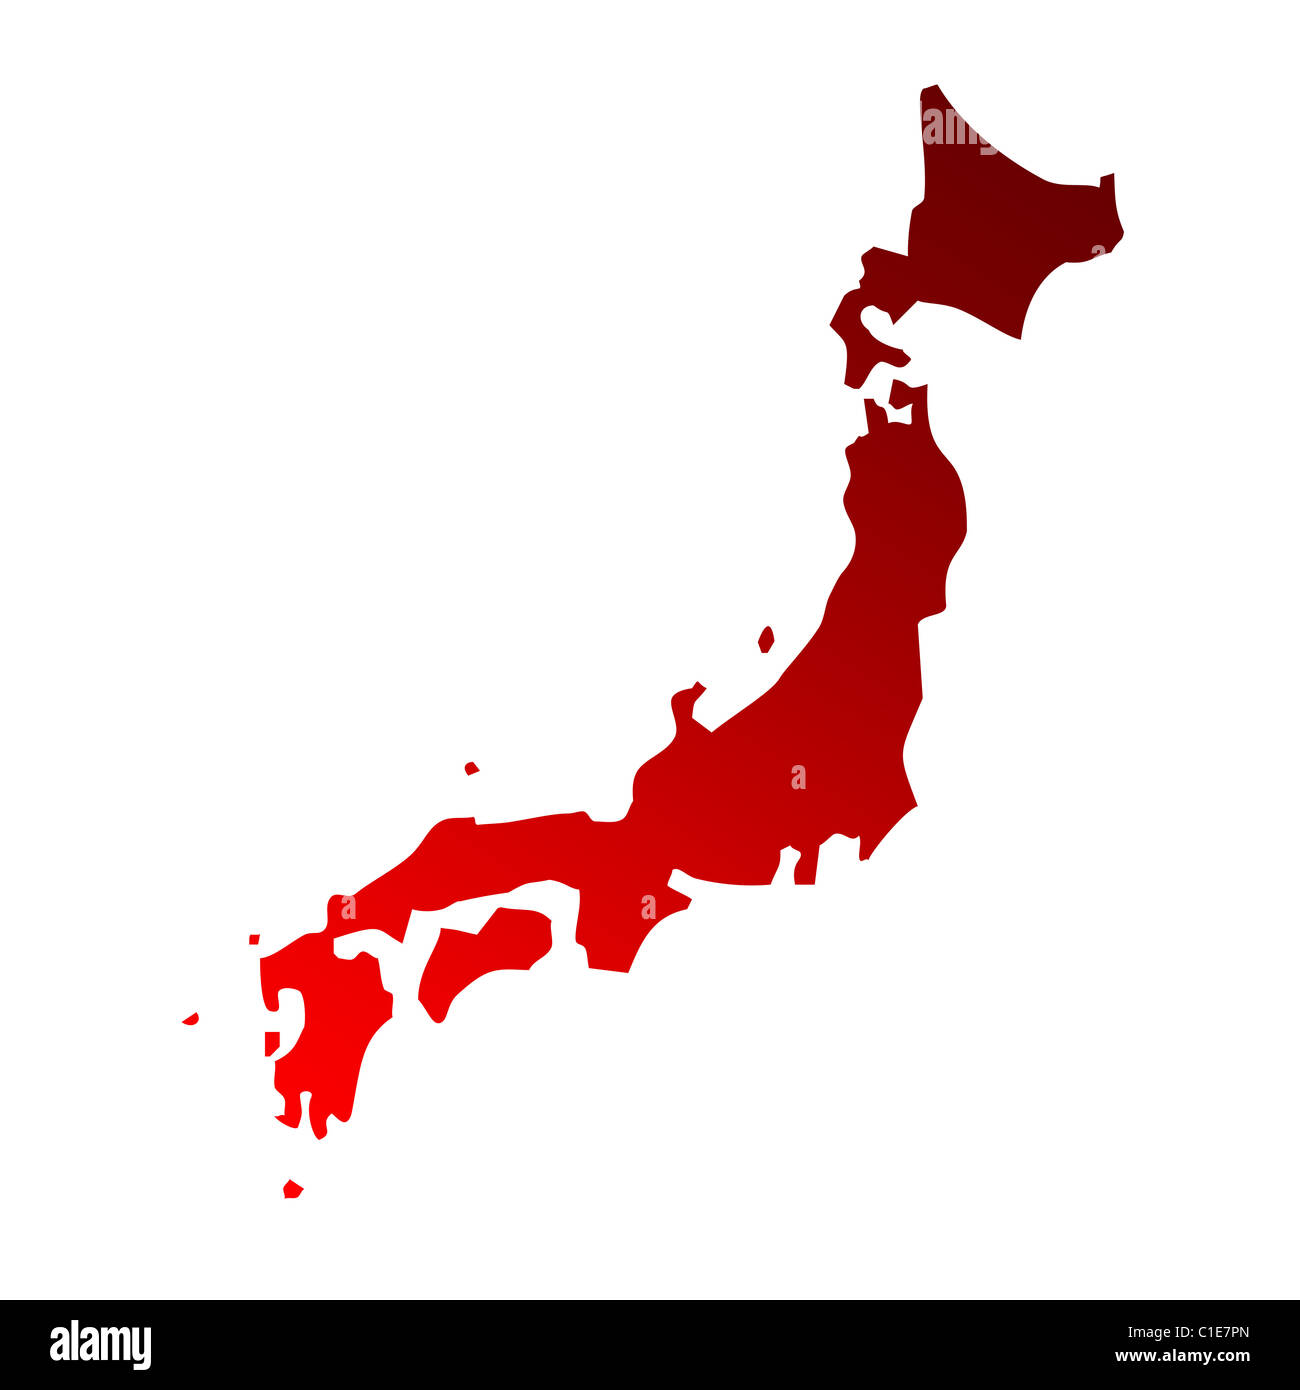 Illustrated map of Japan; isolated on white background. Stock Photo